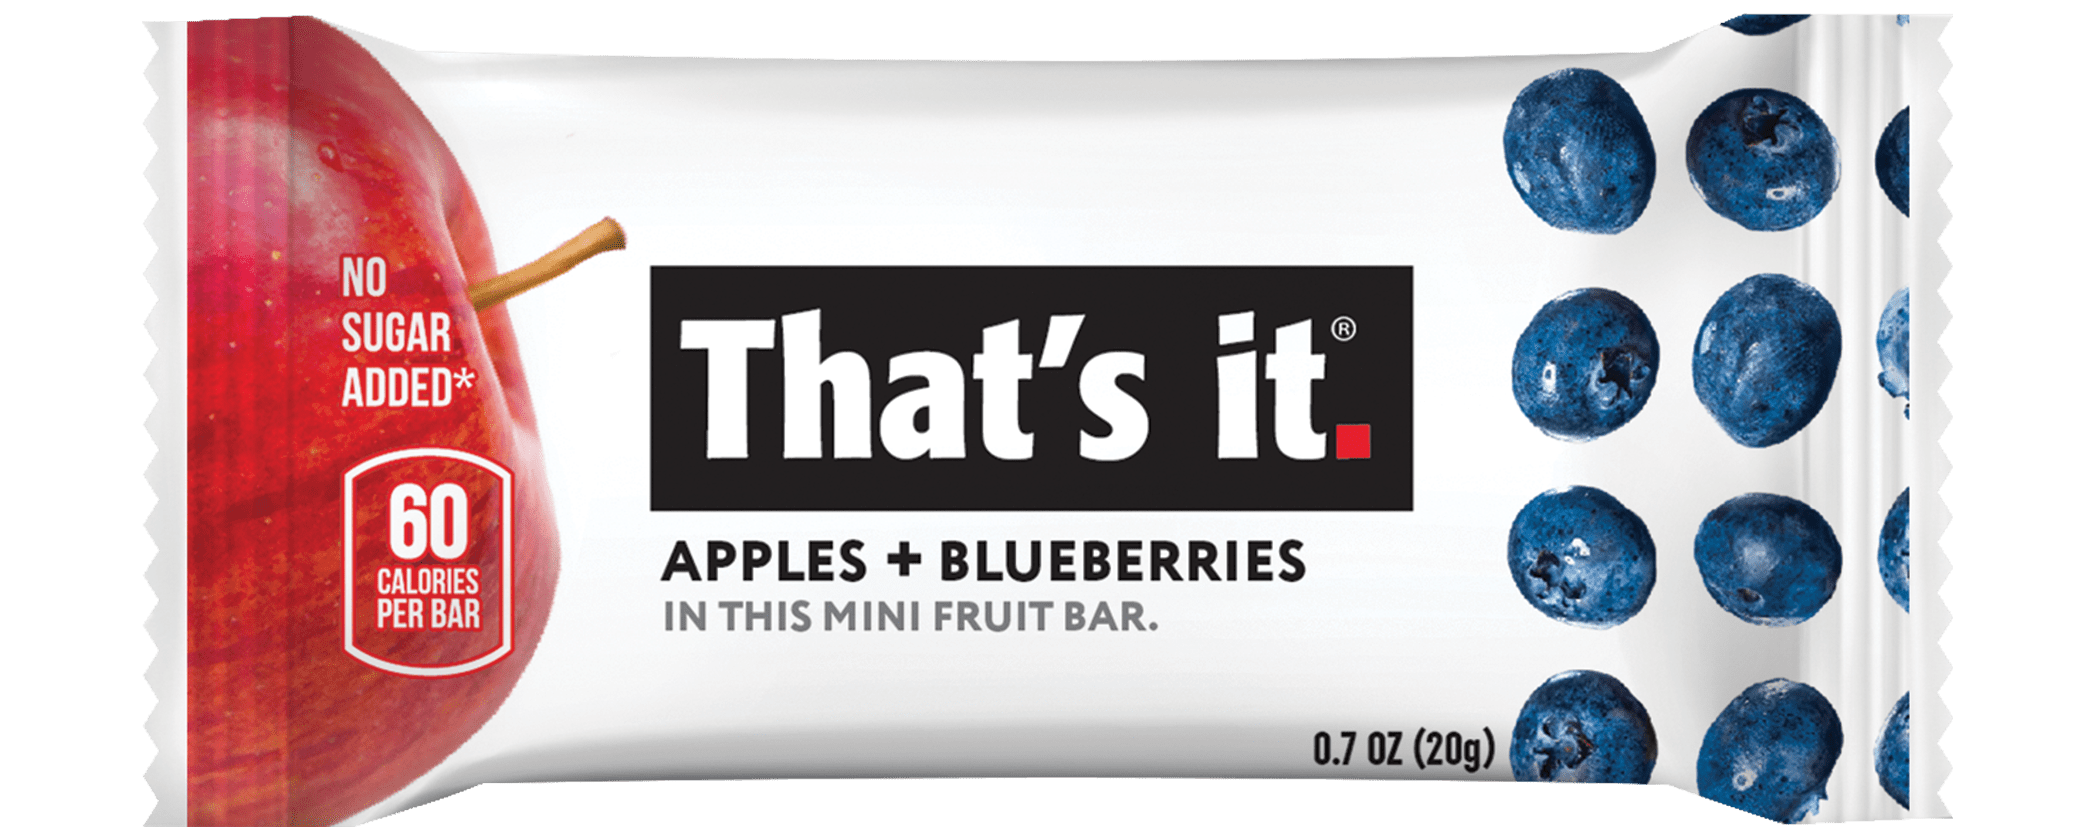 That's It Mini Fruit Bar Apple + Blueberry 50 units per case 0.7 oz